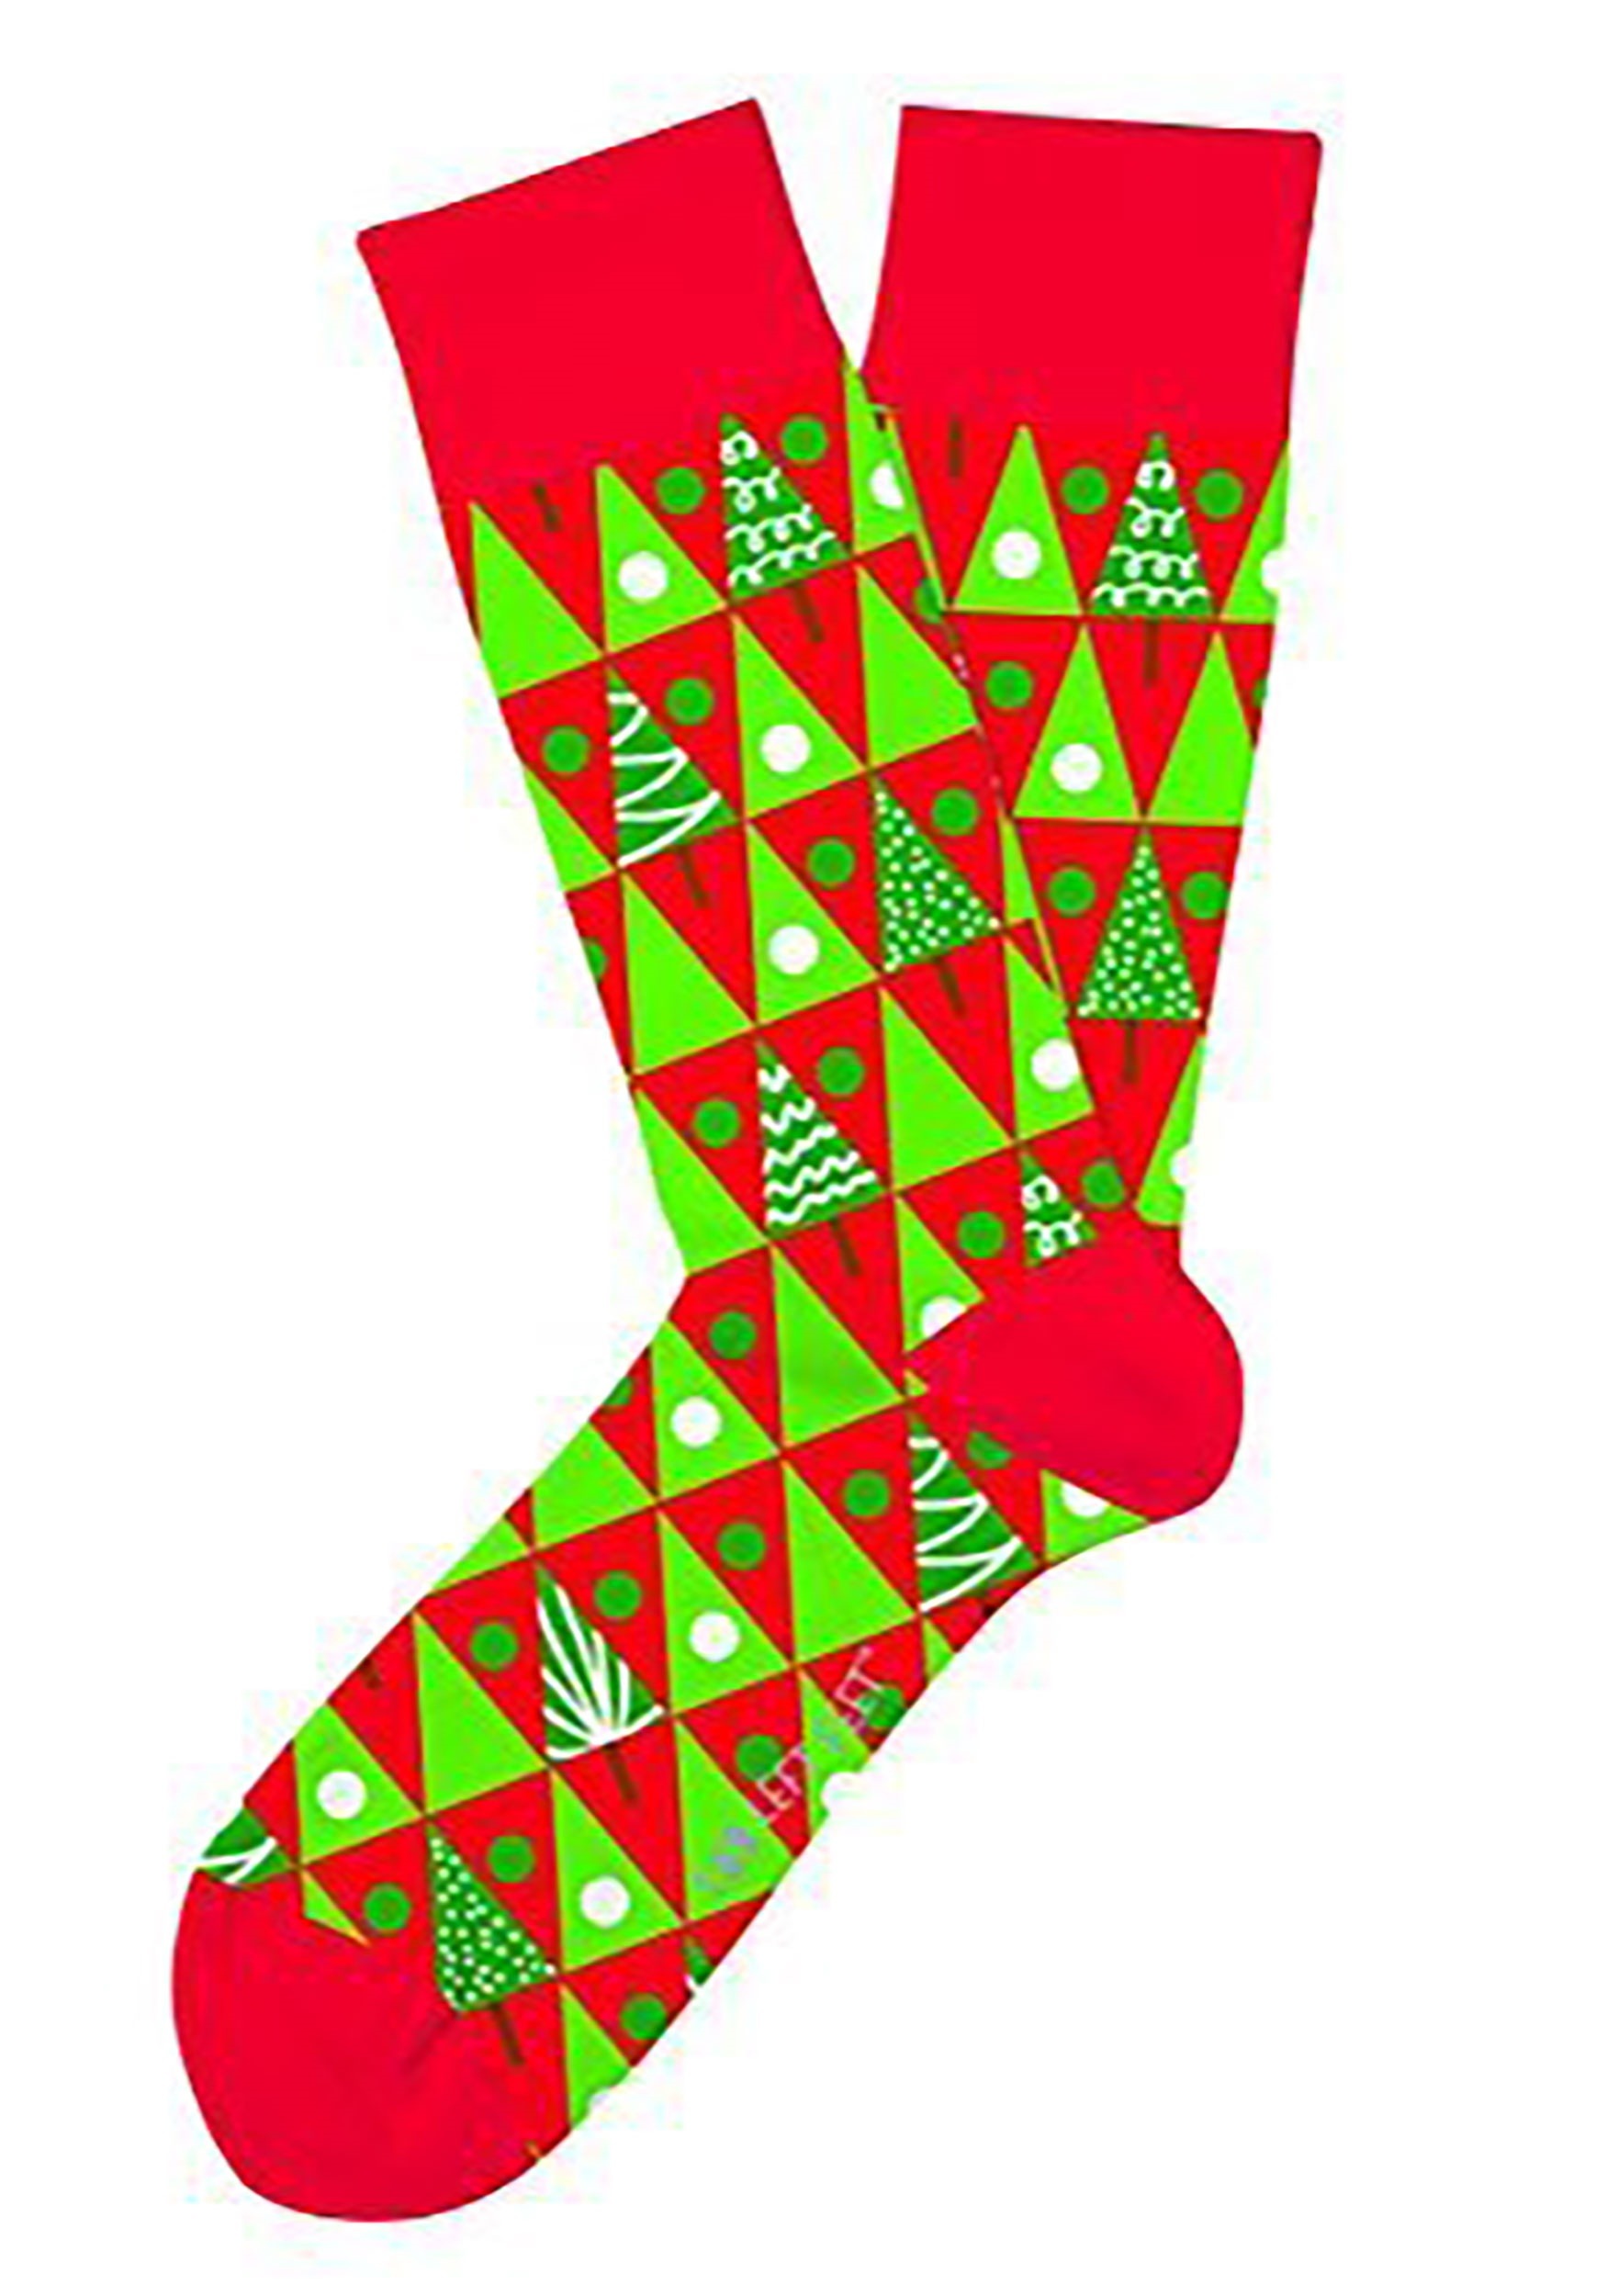 Two Left Feet Christmas Pine Grove Adult Socks